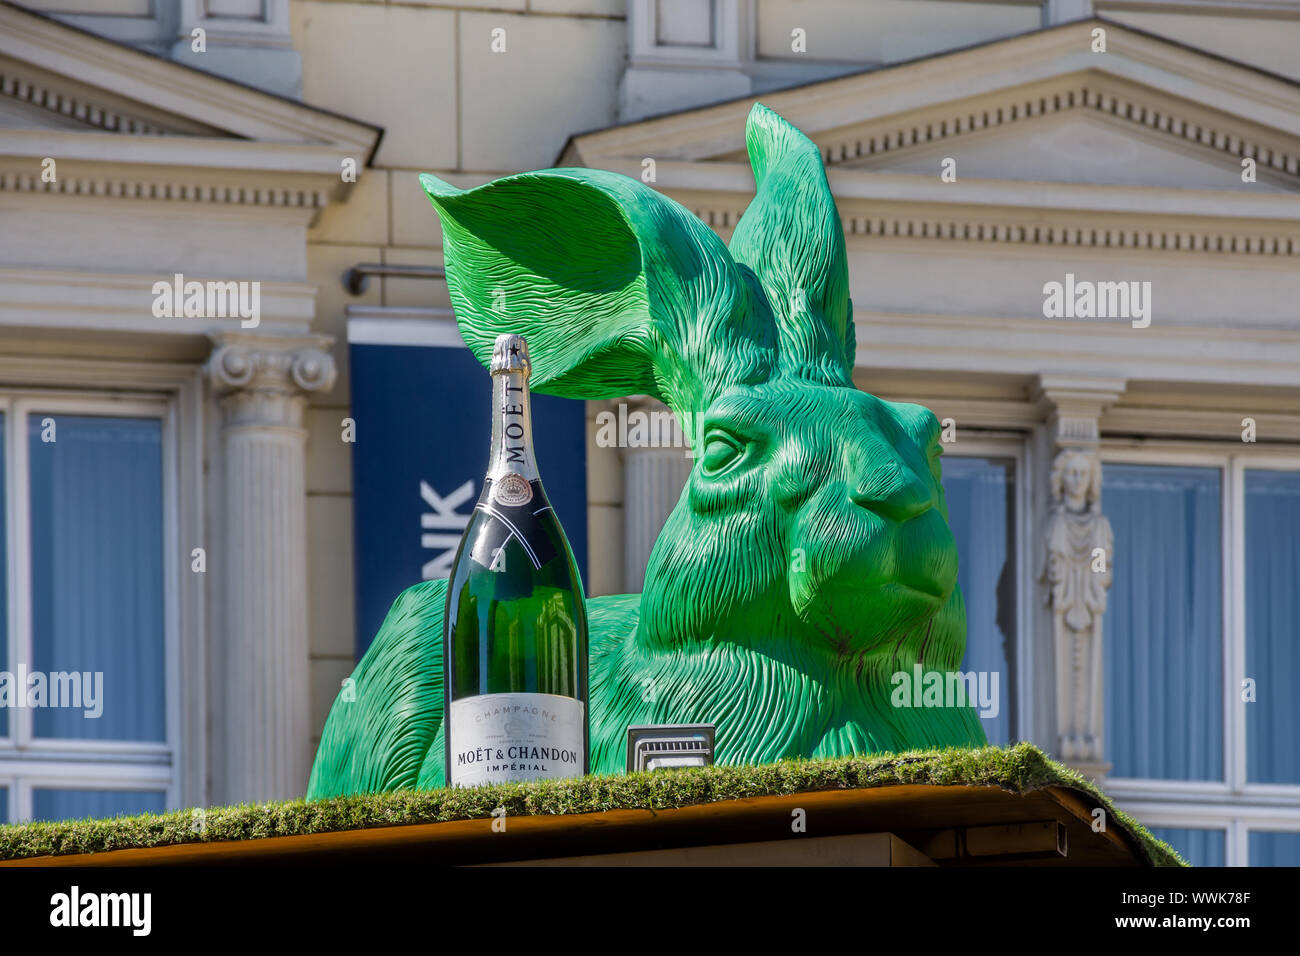 Grüne hase Skulptur Förderung der Albrecht Dürer Ausstellung (Okt 2019 -  Jan 2020) an der Albertina in Wien, Österreich Stockfotografie - Alamy